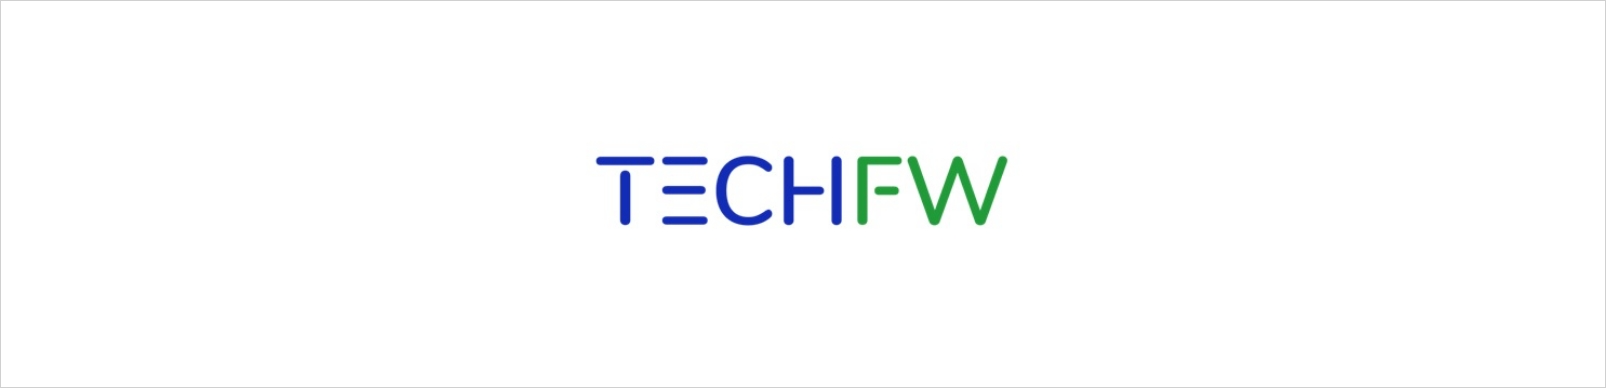 TechFW logo